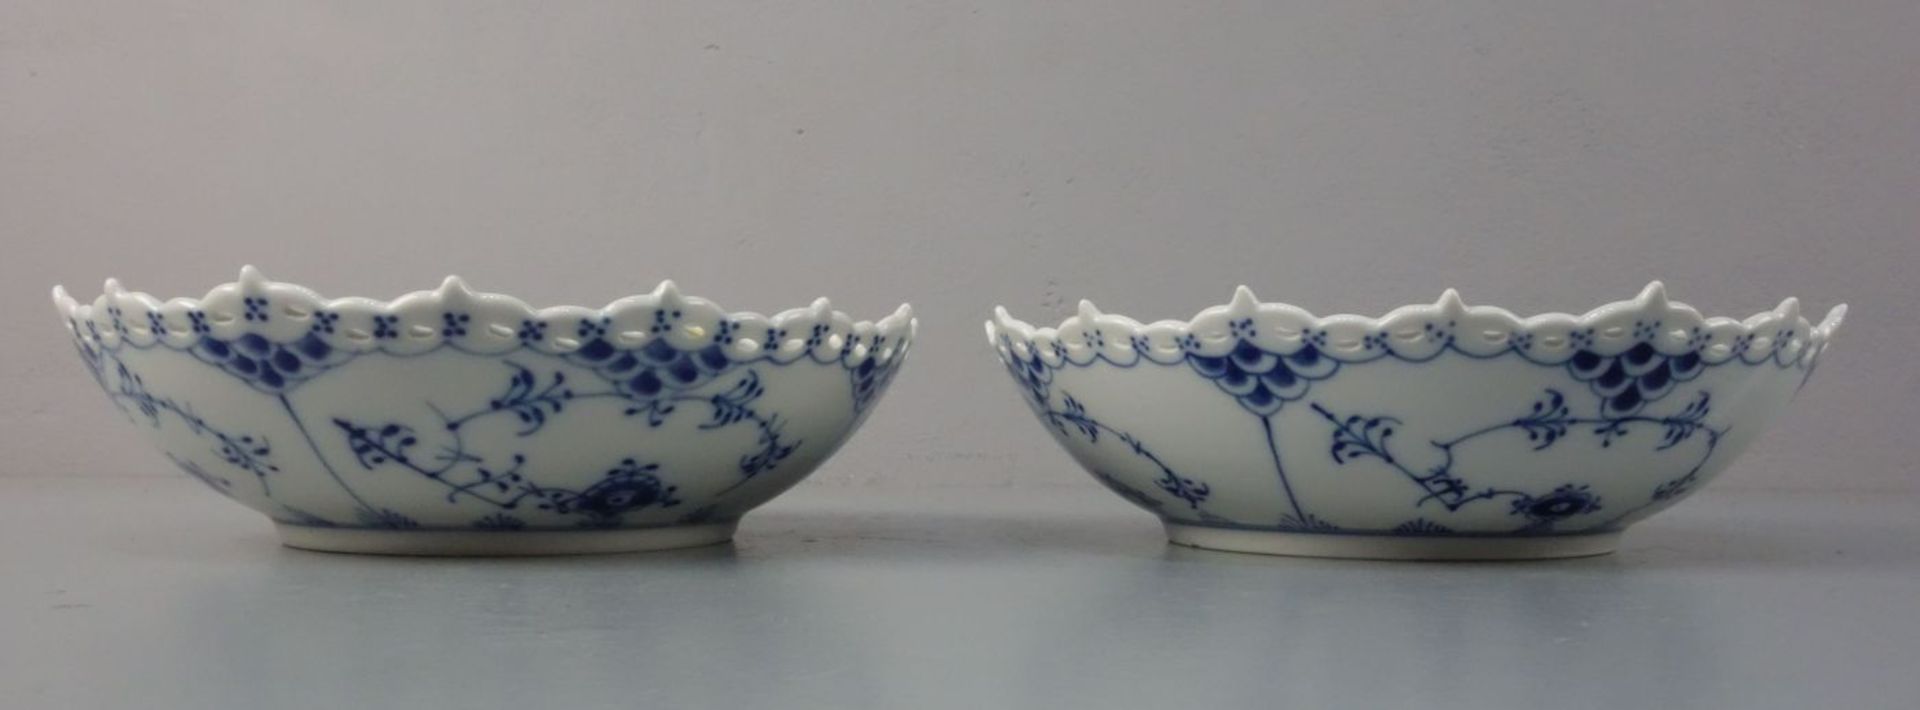 PAAR SCHALEN / two bowls, "MUSSELMALET VOLLSPITZE", Porzellan, Manufaktur Royal Copenhagen, - Bild 2 aus 3